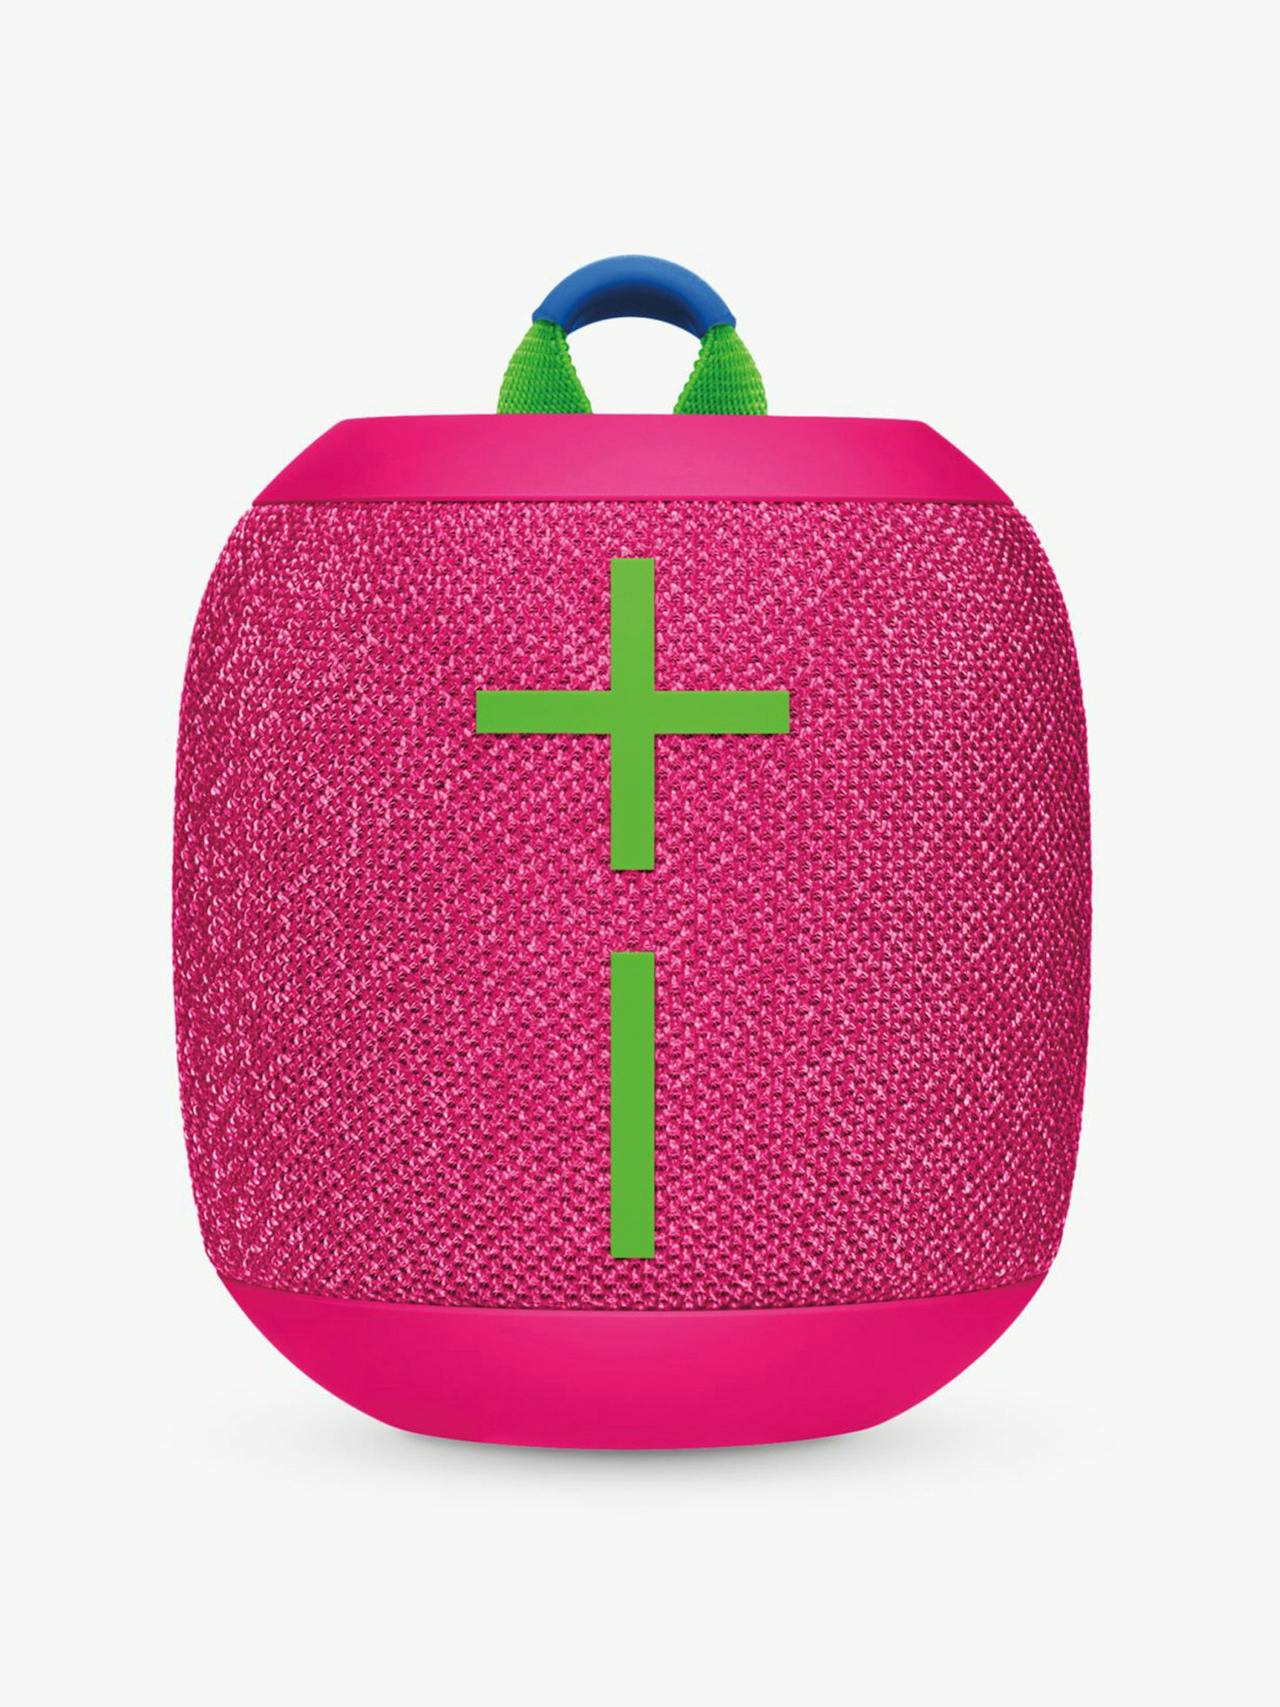 Bluetooth waterproof portable speaker in hyper pink